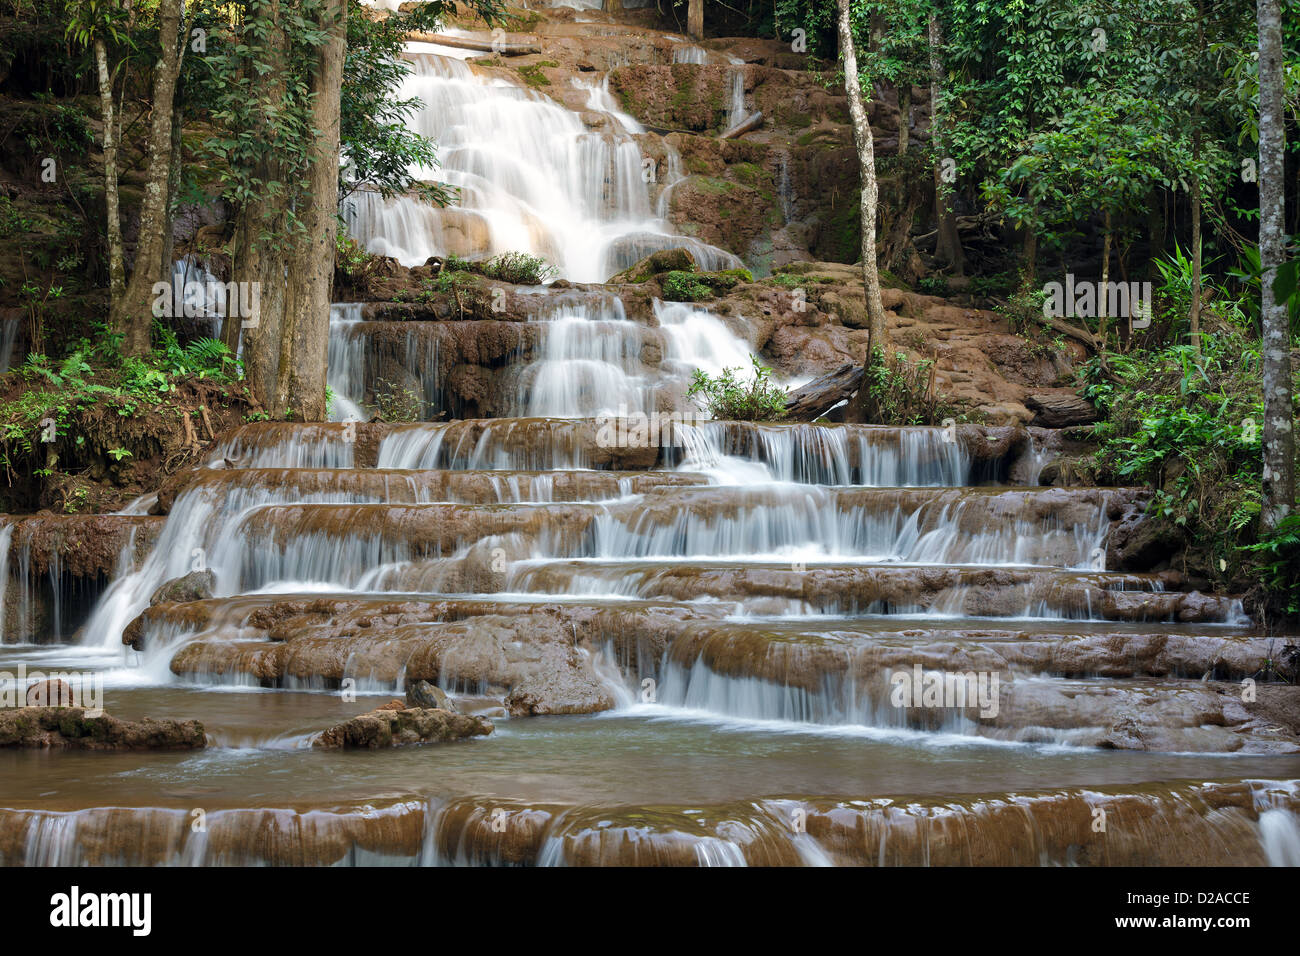 Pha Charoen tropical waterfall, Thailand Stock Photo